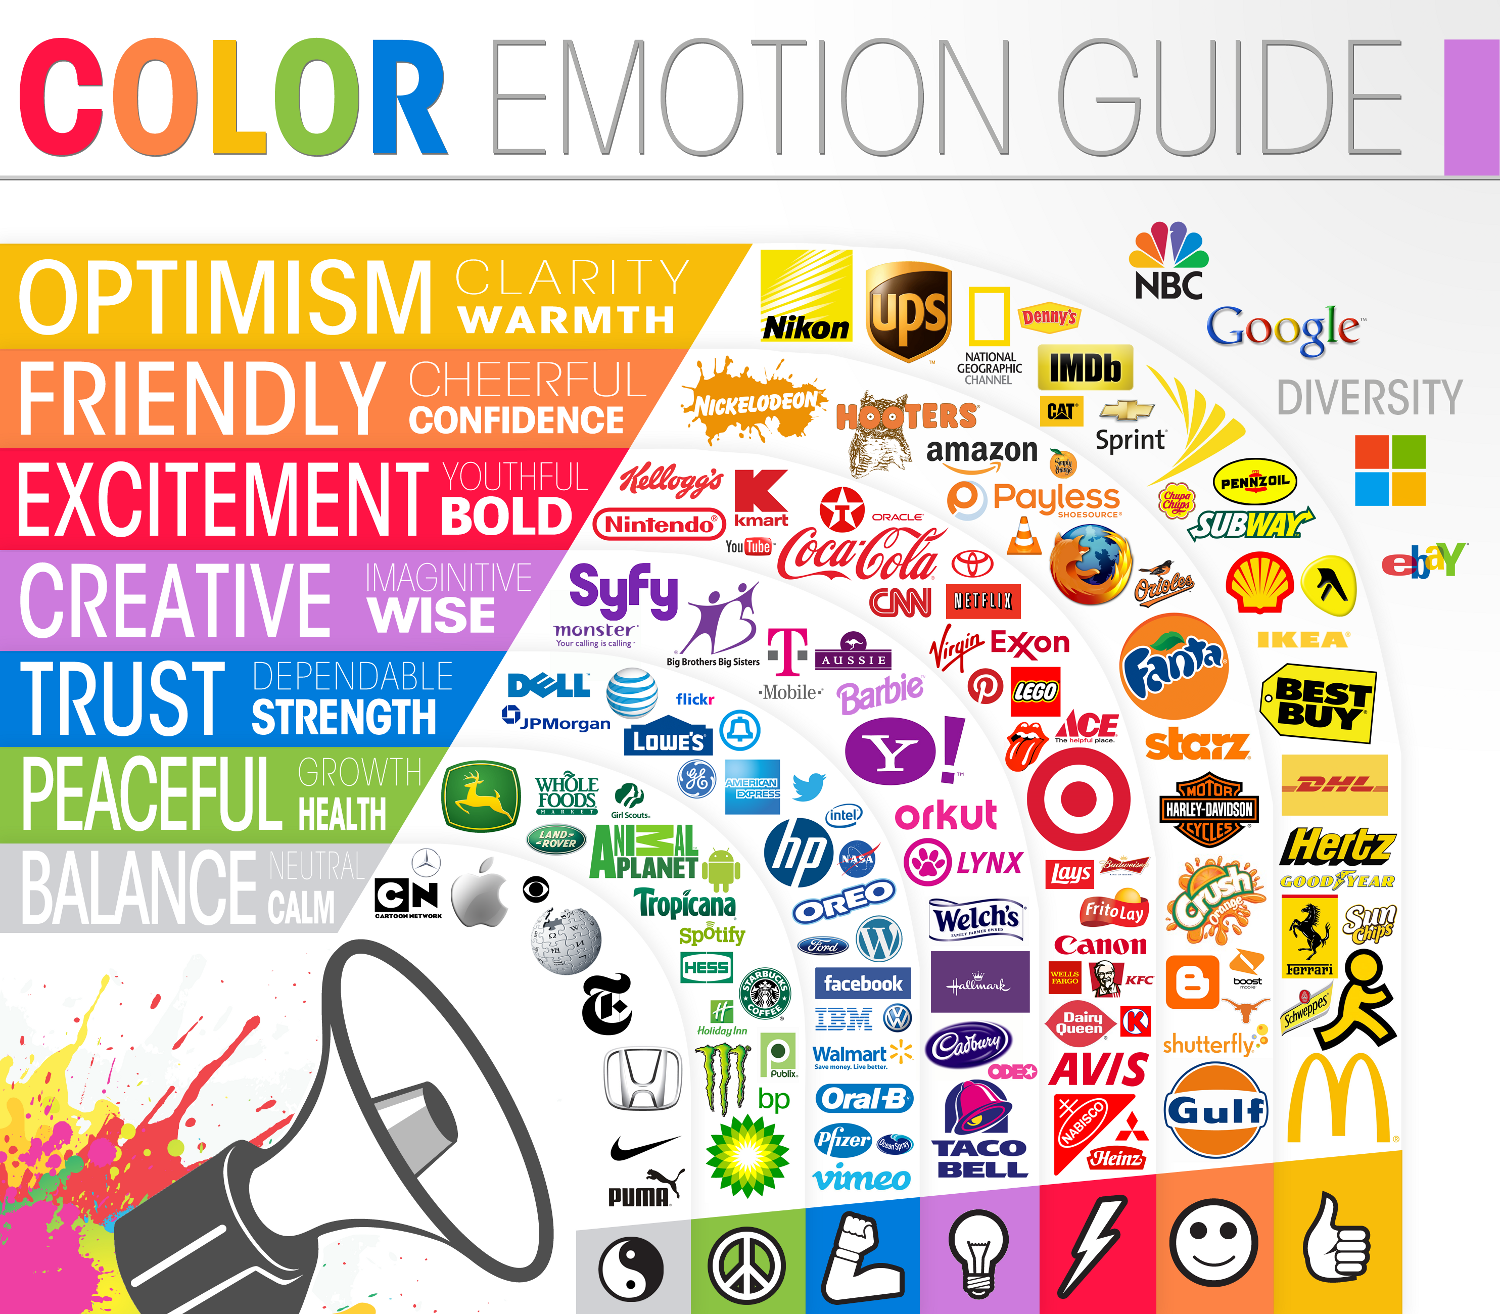 Color_Emotion_Guide22-2